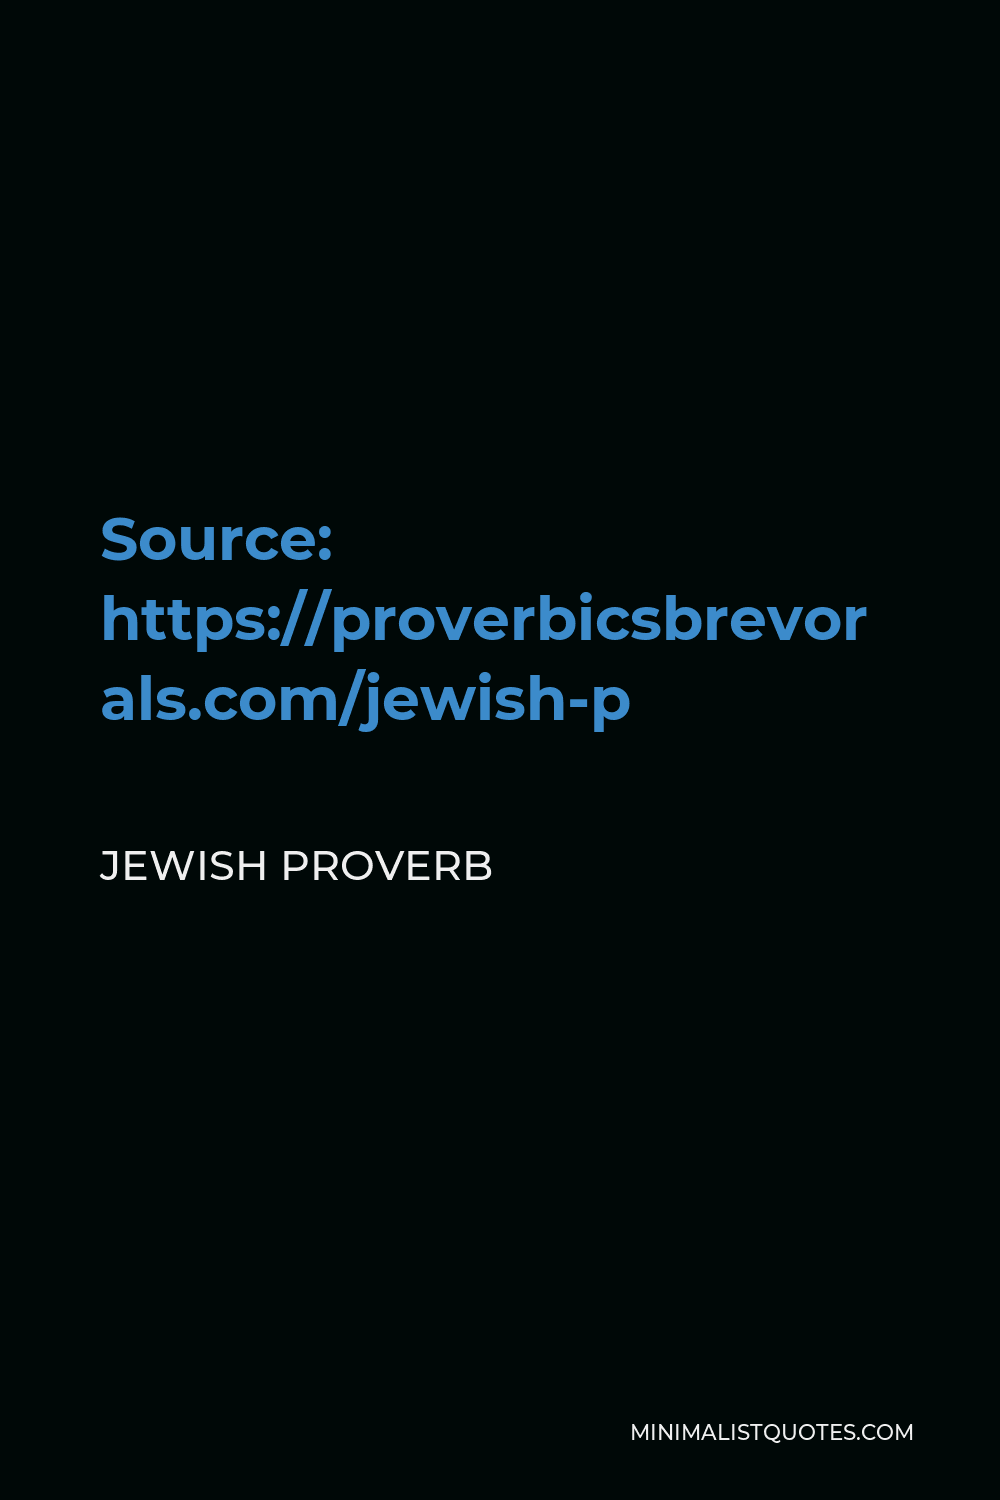 Jewish Proverb Quote - Source: https://proverbicals.com/jewish-proverbs